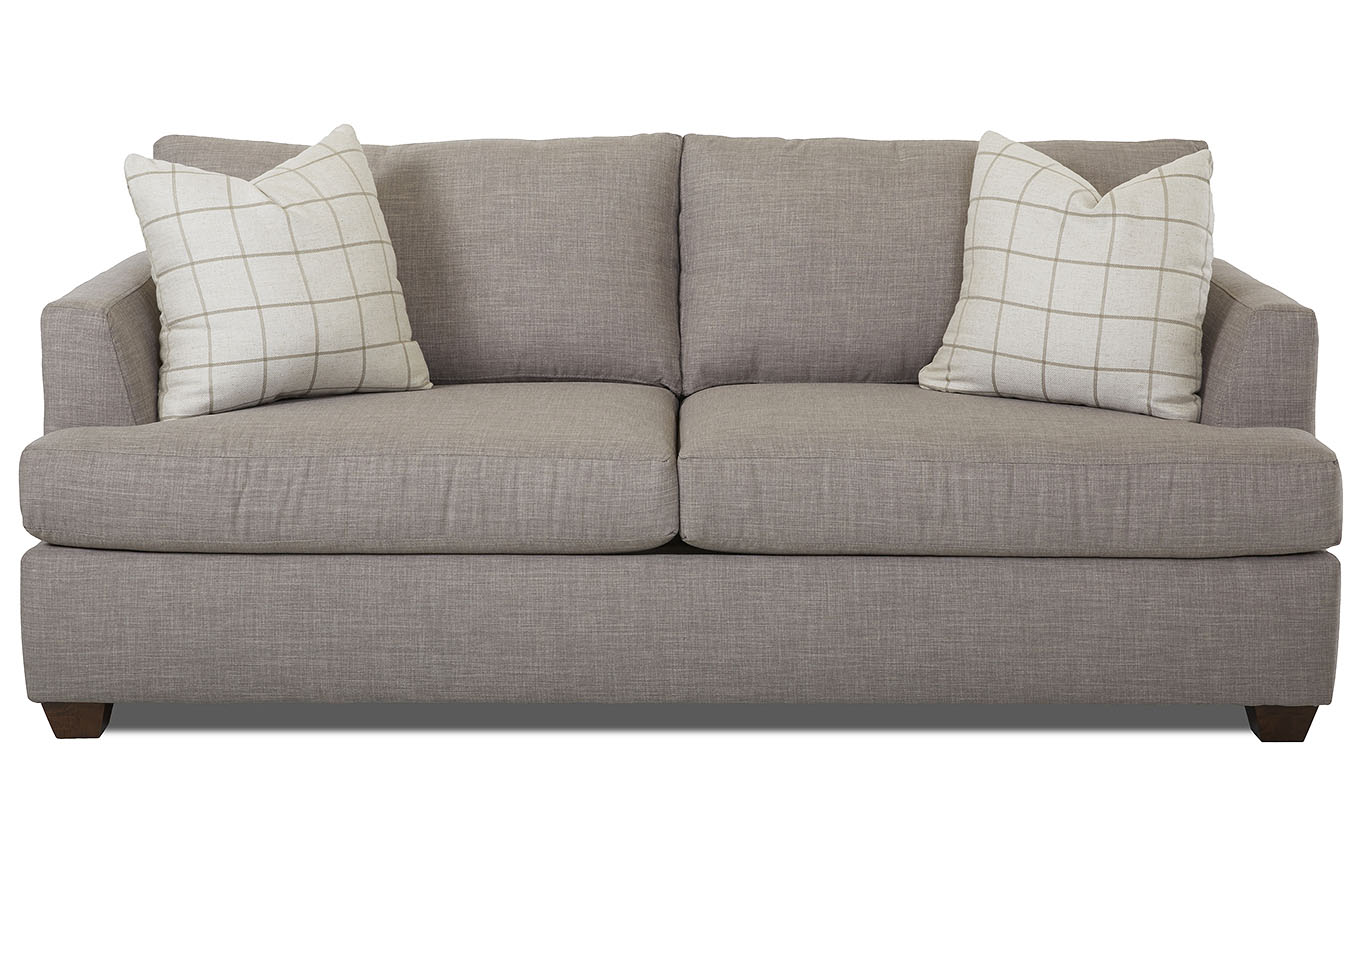 Jack Stone Stationary Fabric Sofa,Klaussner Home Furnishings